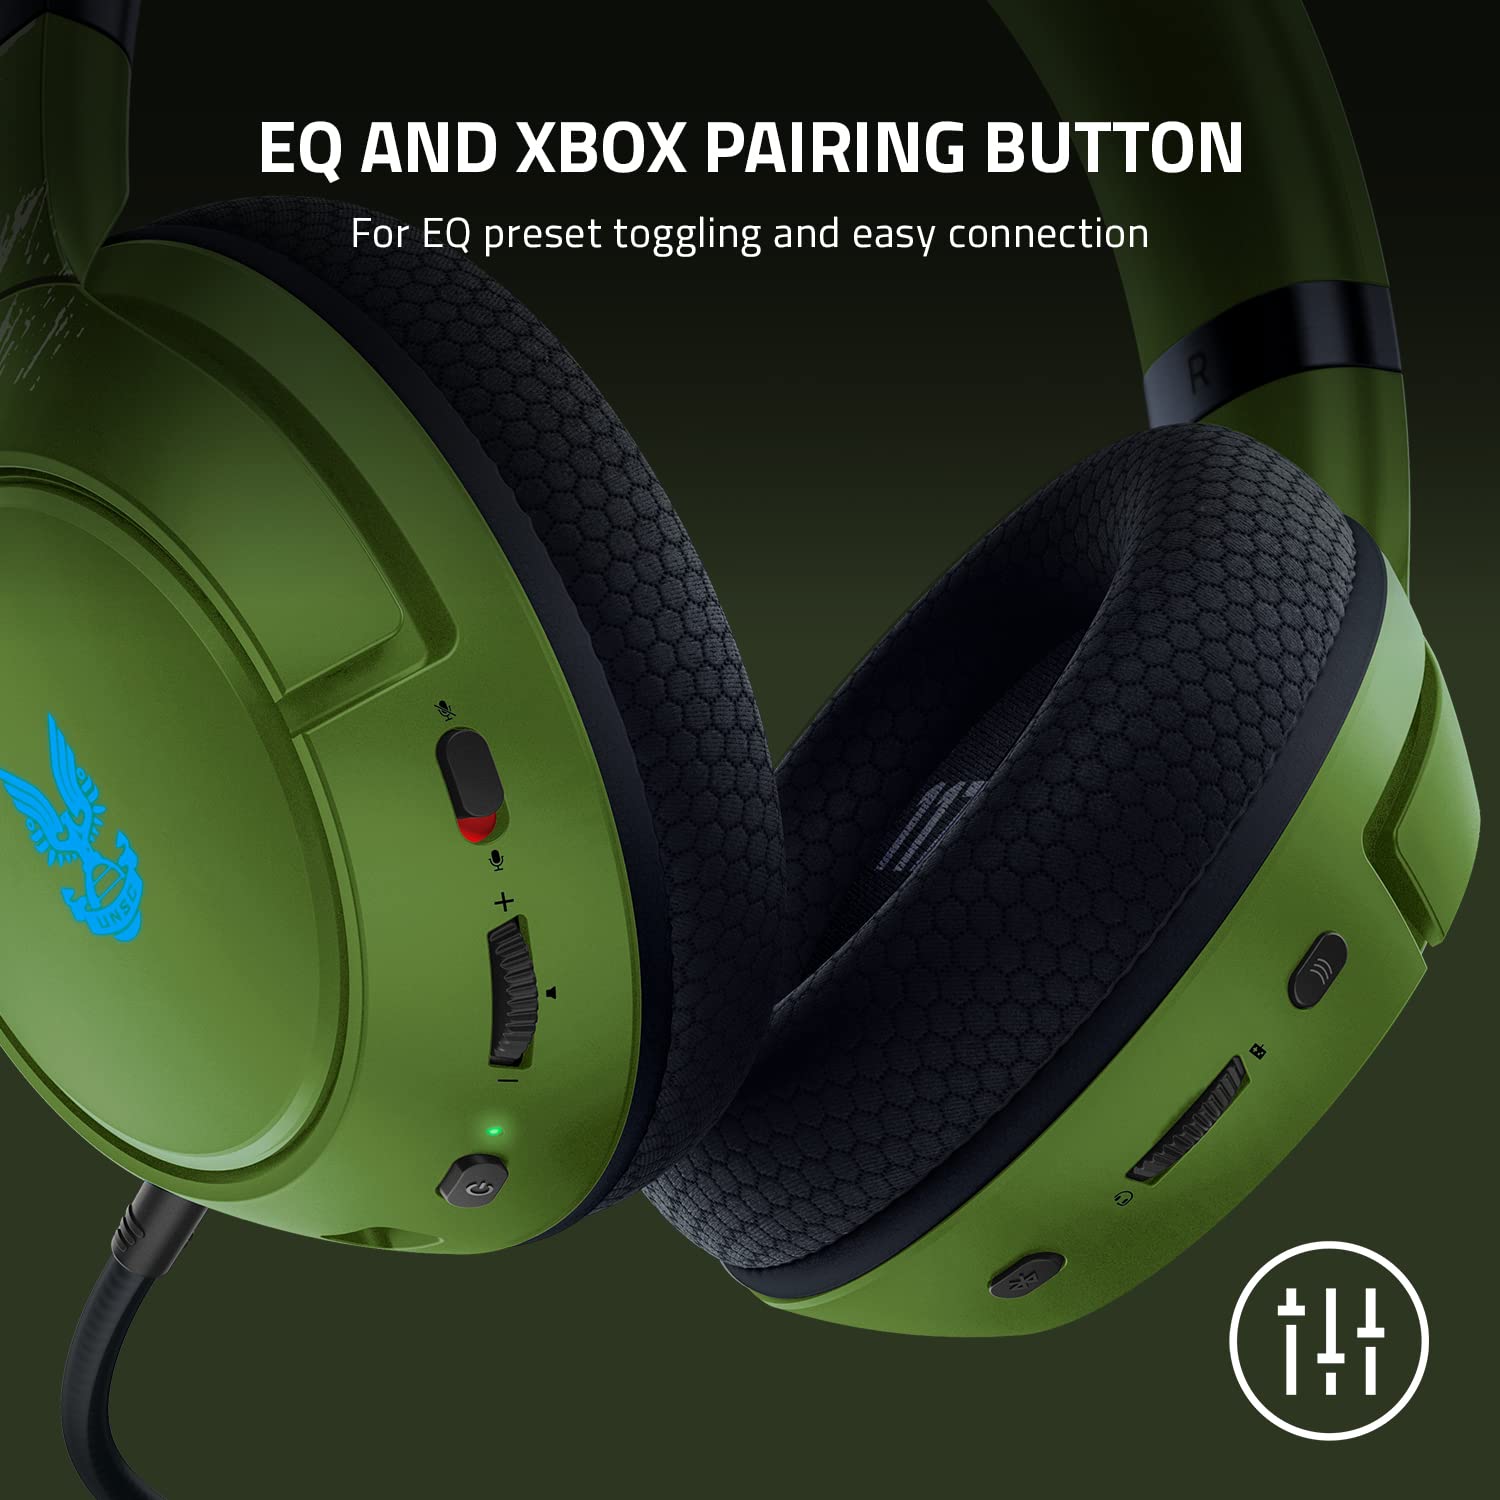 Razer Kaira Pro Wireless Gaming Headset for Xbox Series X | S - Halo Infinite Edition - New